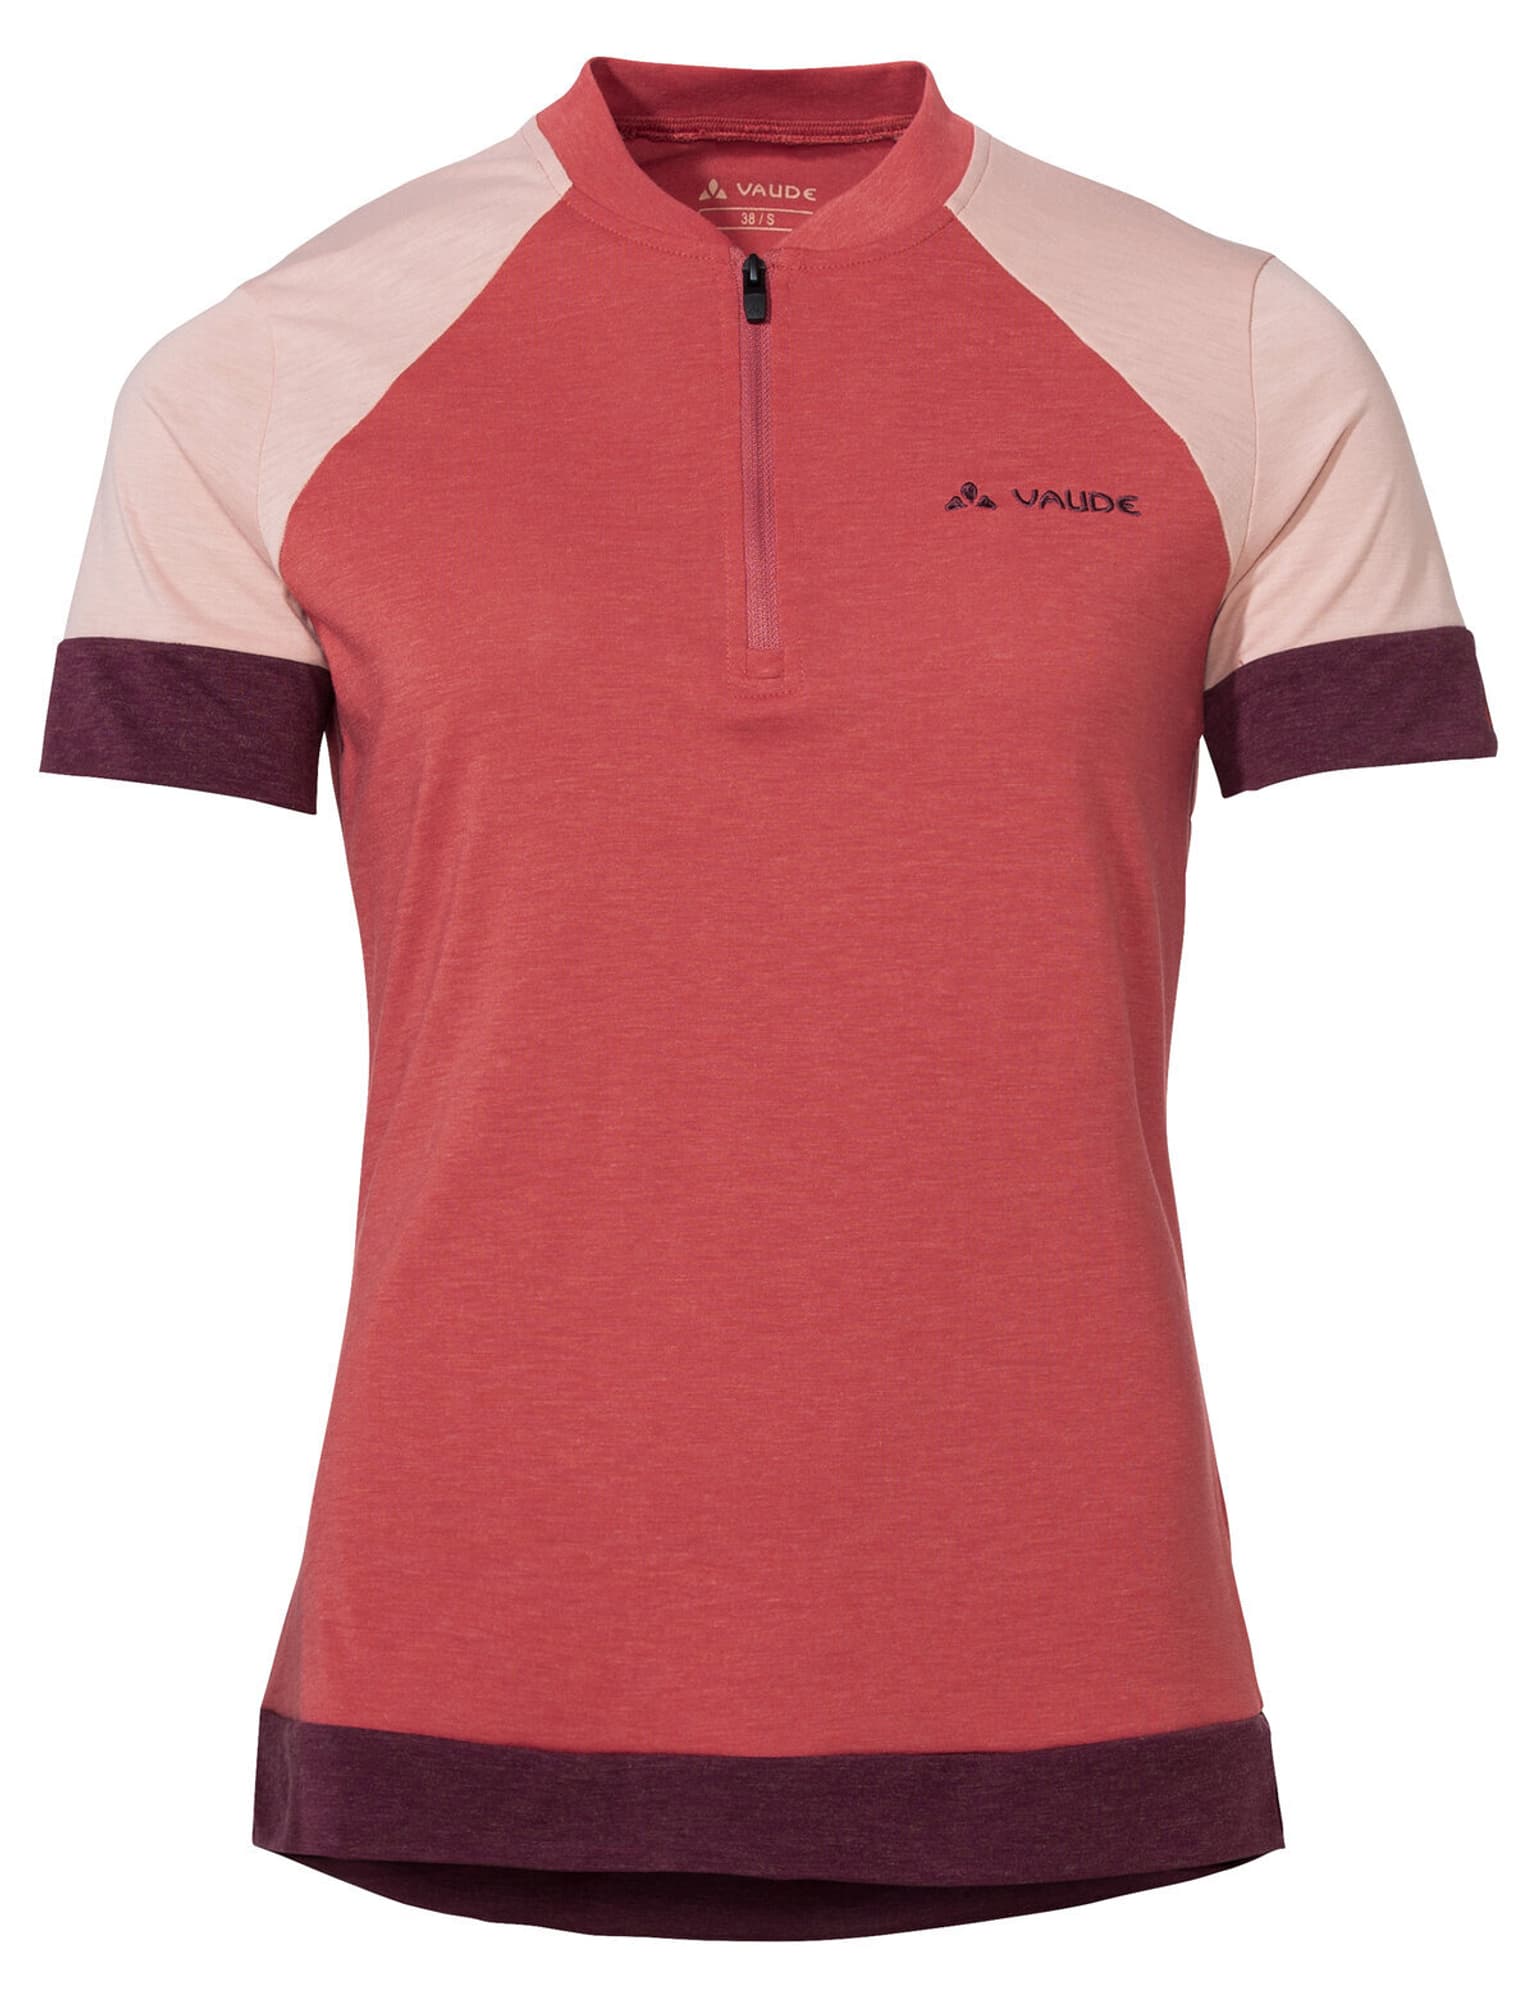 Vaude Vaude Altissimo Q-Zip Shirt Maglietta da bici rosso-chiaro 1